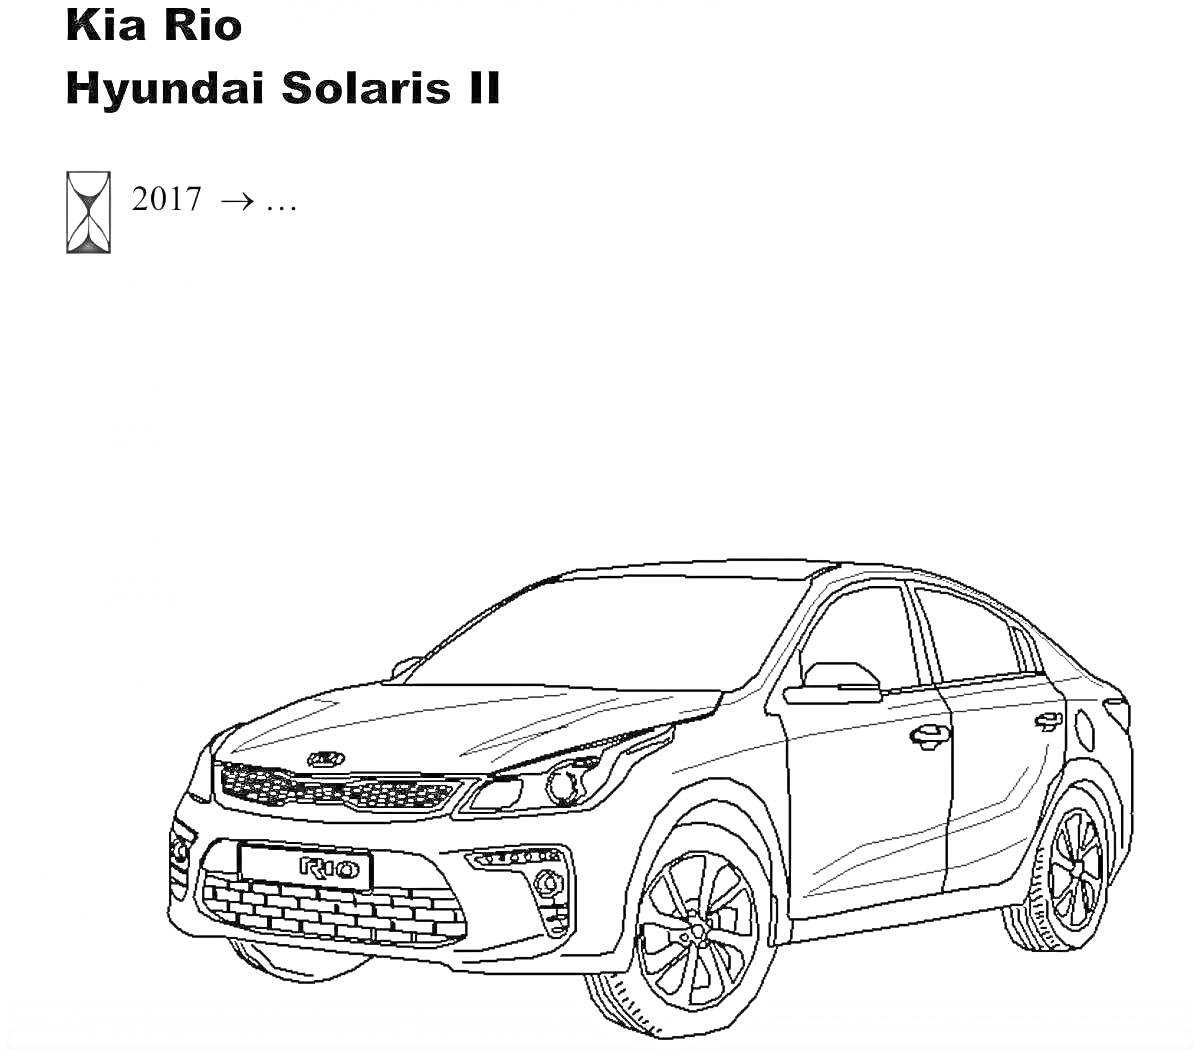 Раскраска Kia Rio Hyundai Solaris II, вид спереди, боковой вид, кузов седан, рисунок